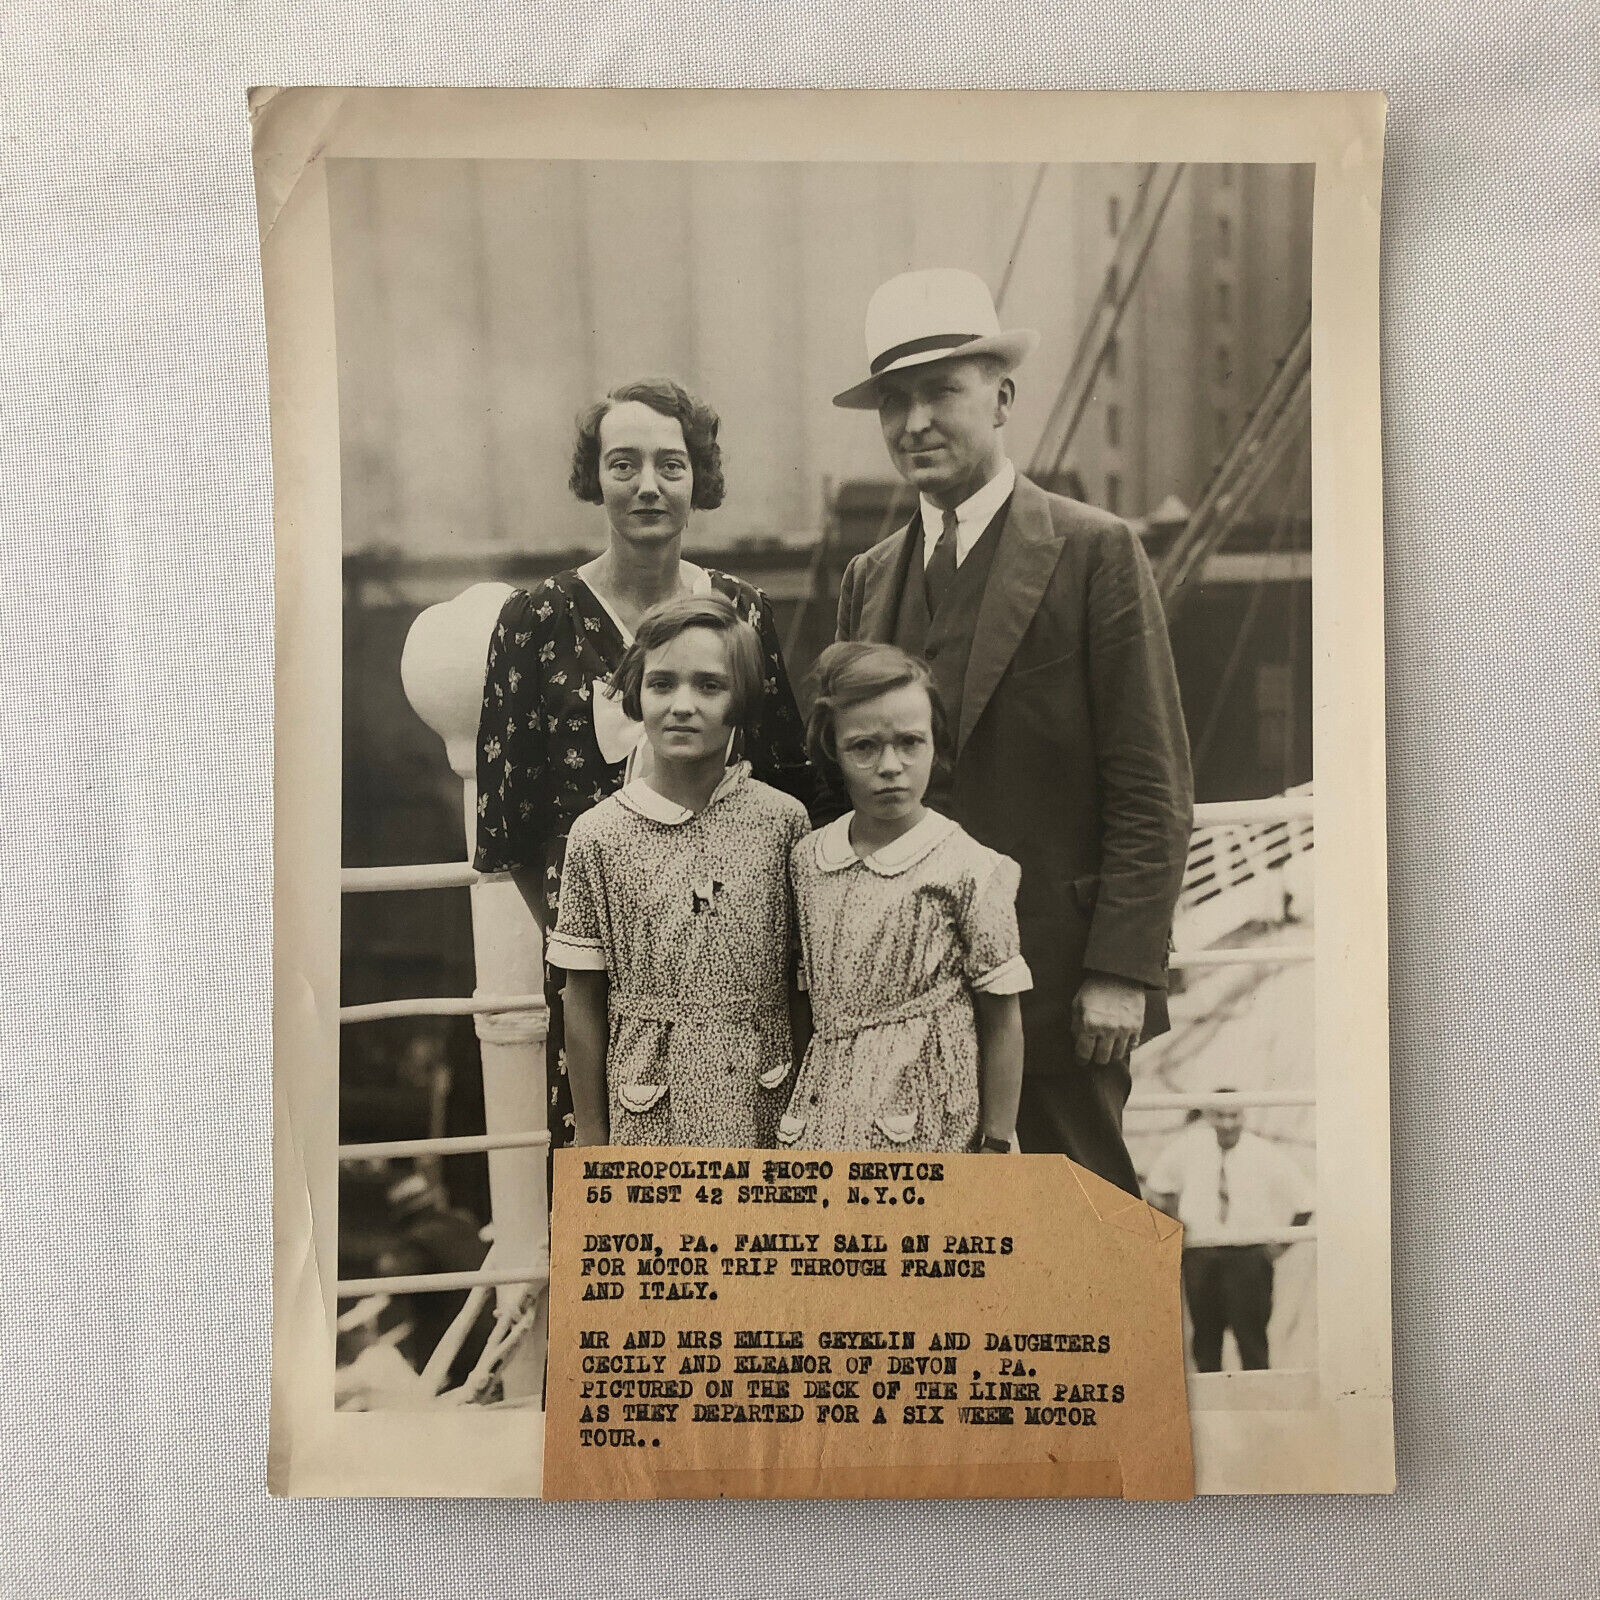 Press Photo Photograph Devon Pennsylvania Family Children on SS Paris Ship Boat